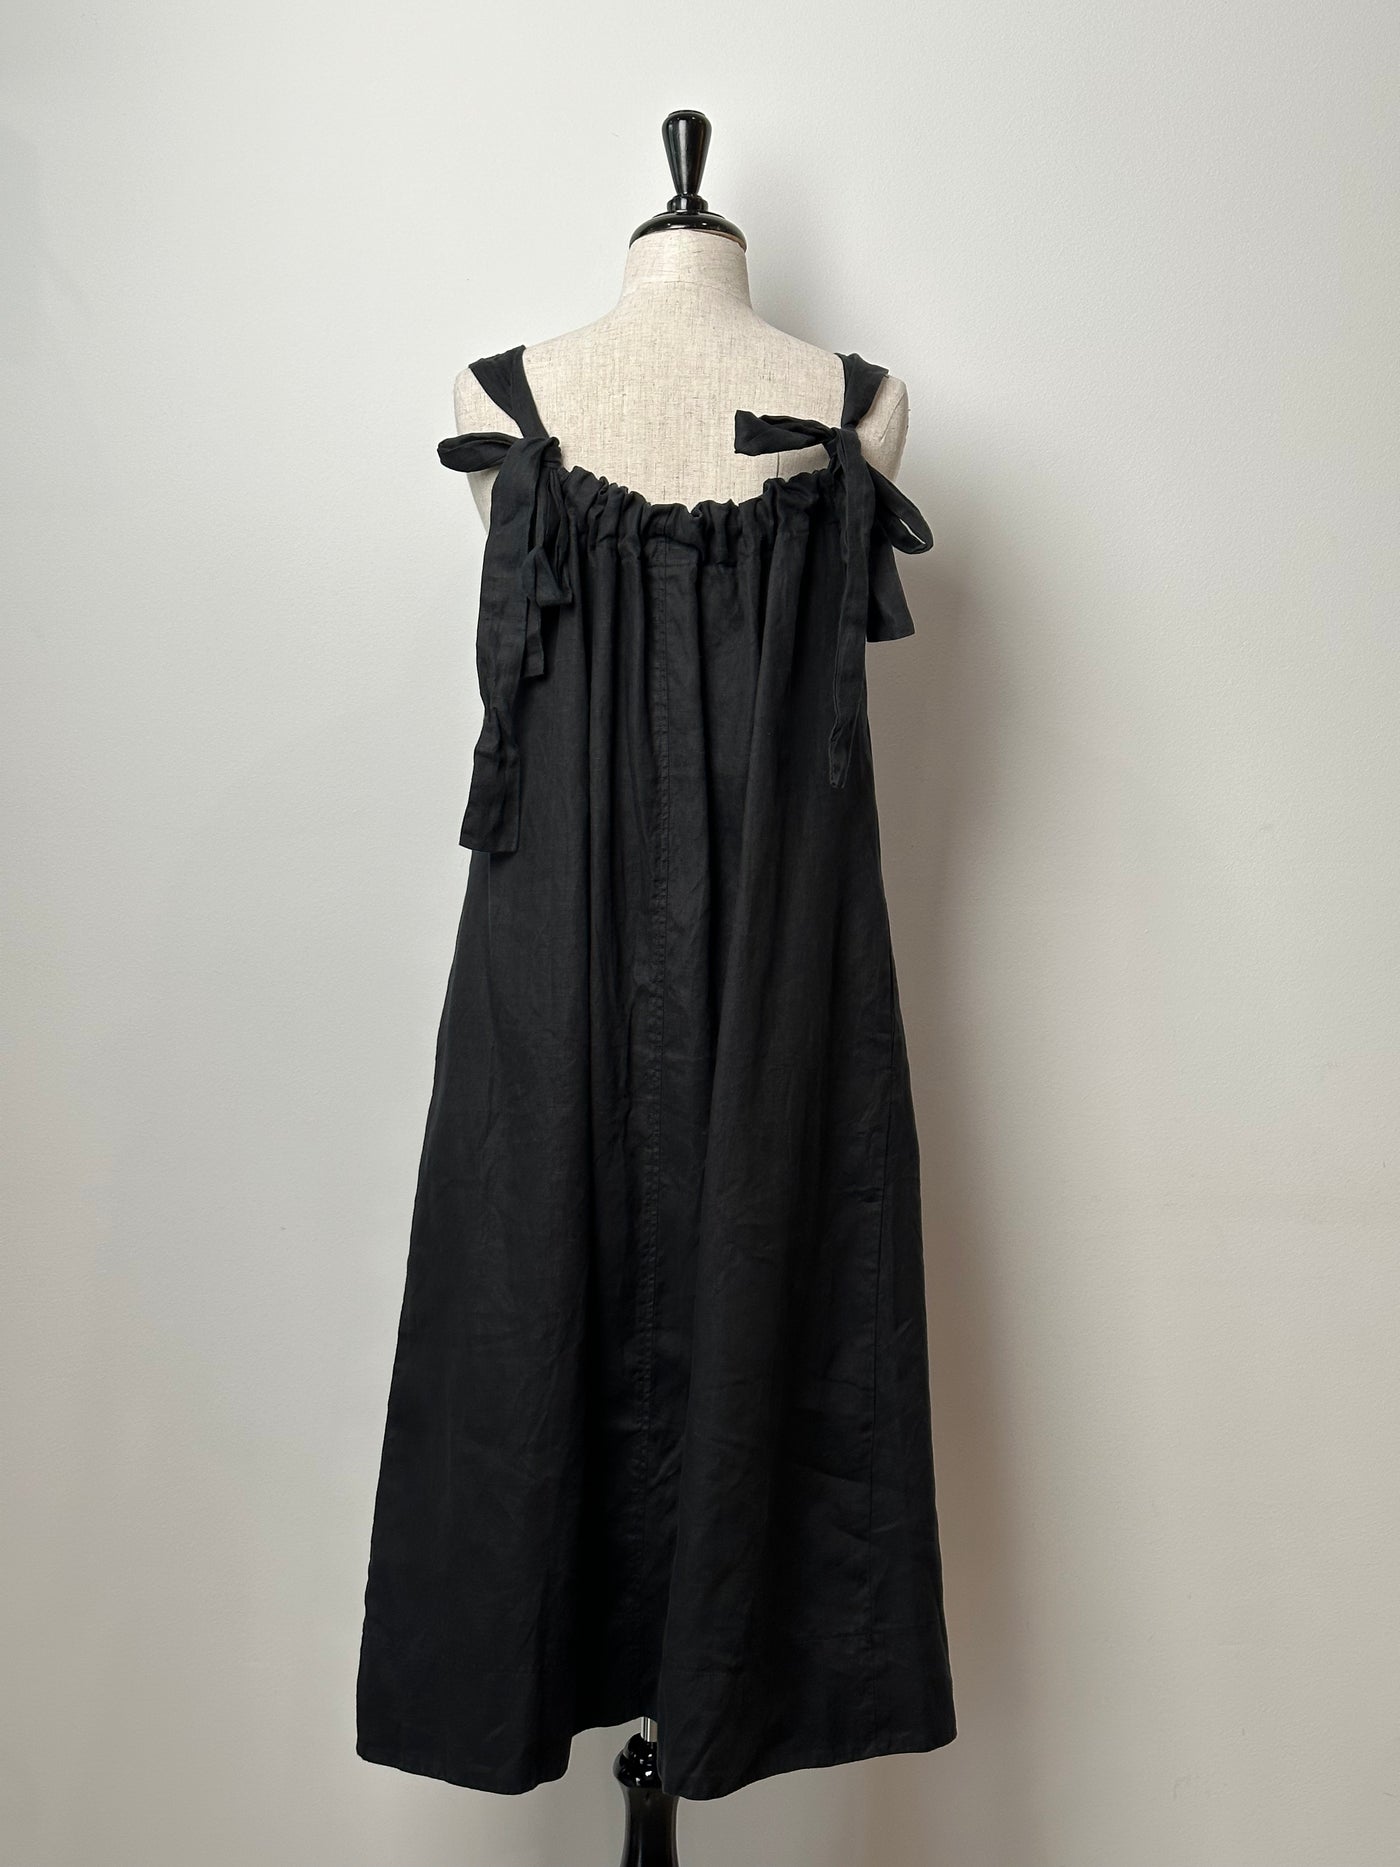 Valia - Sorrento dress. Black